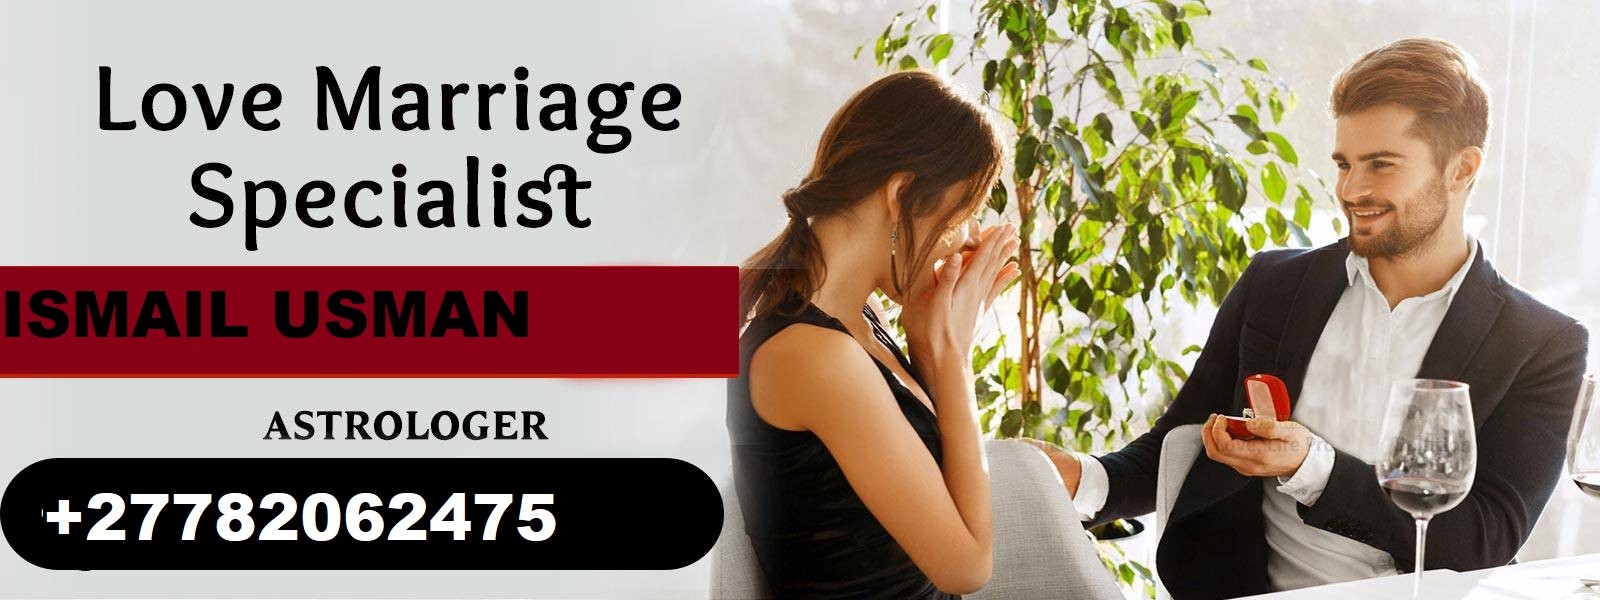 HOW TO REMOVE MISUNDERSTANDINGS OR MISTRUST IN MARRIAGE +27782062475